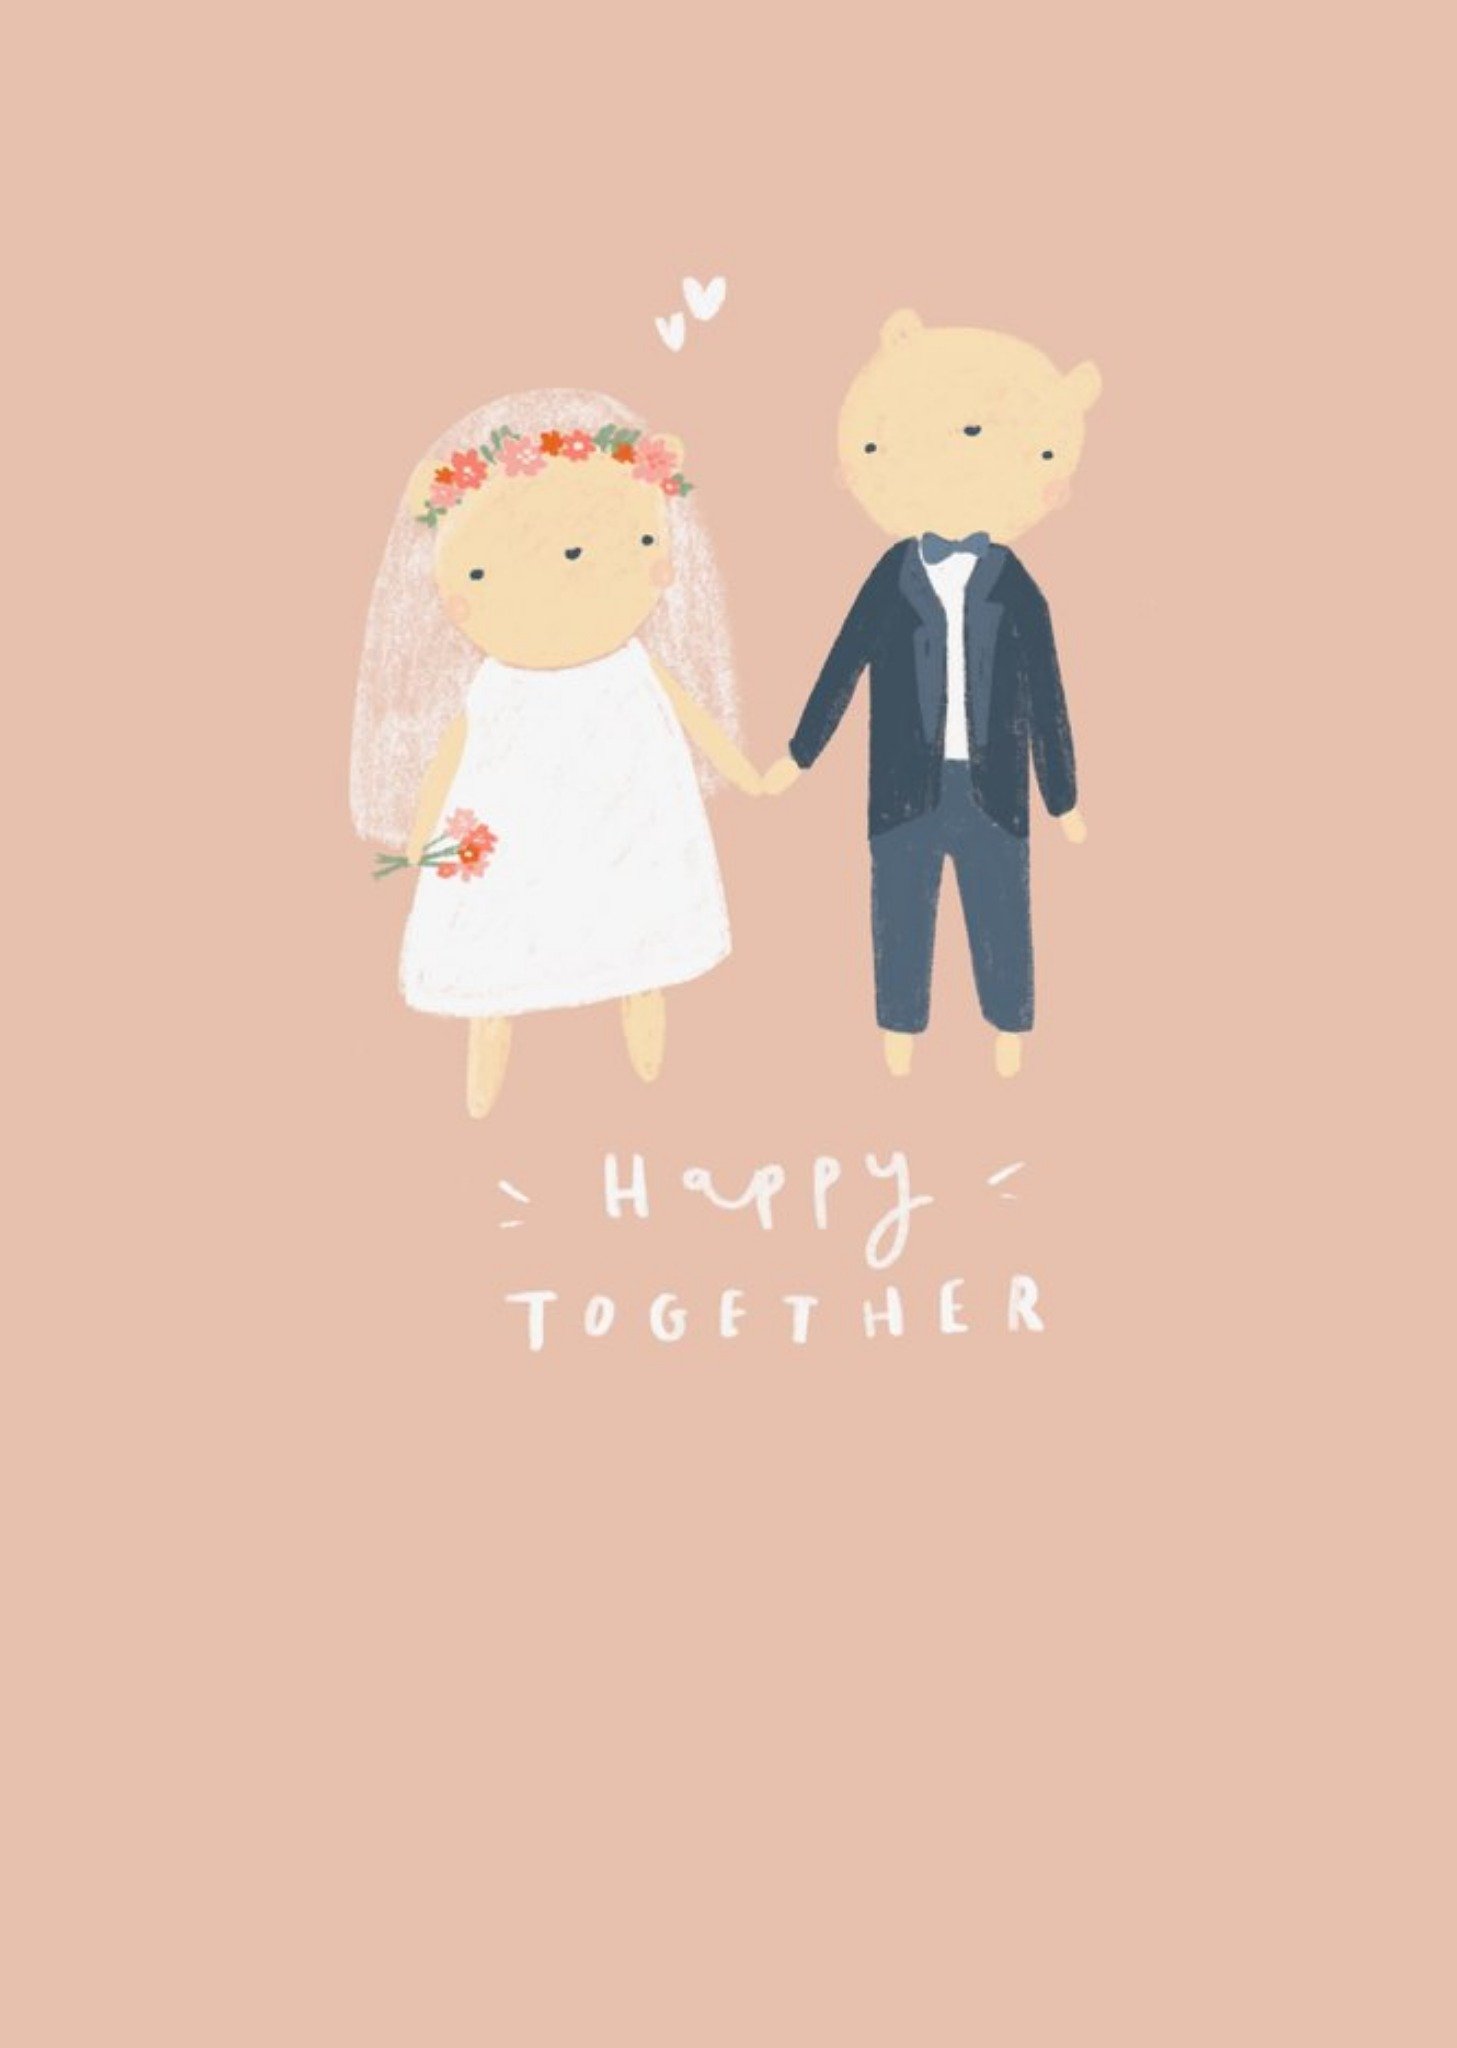 Love Hearts Beth Fletcher Illustrations Cute Illustrated Wedding Day Card Ecard